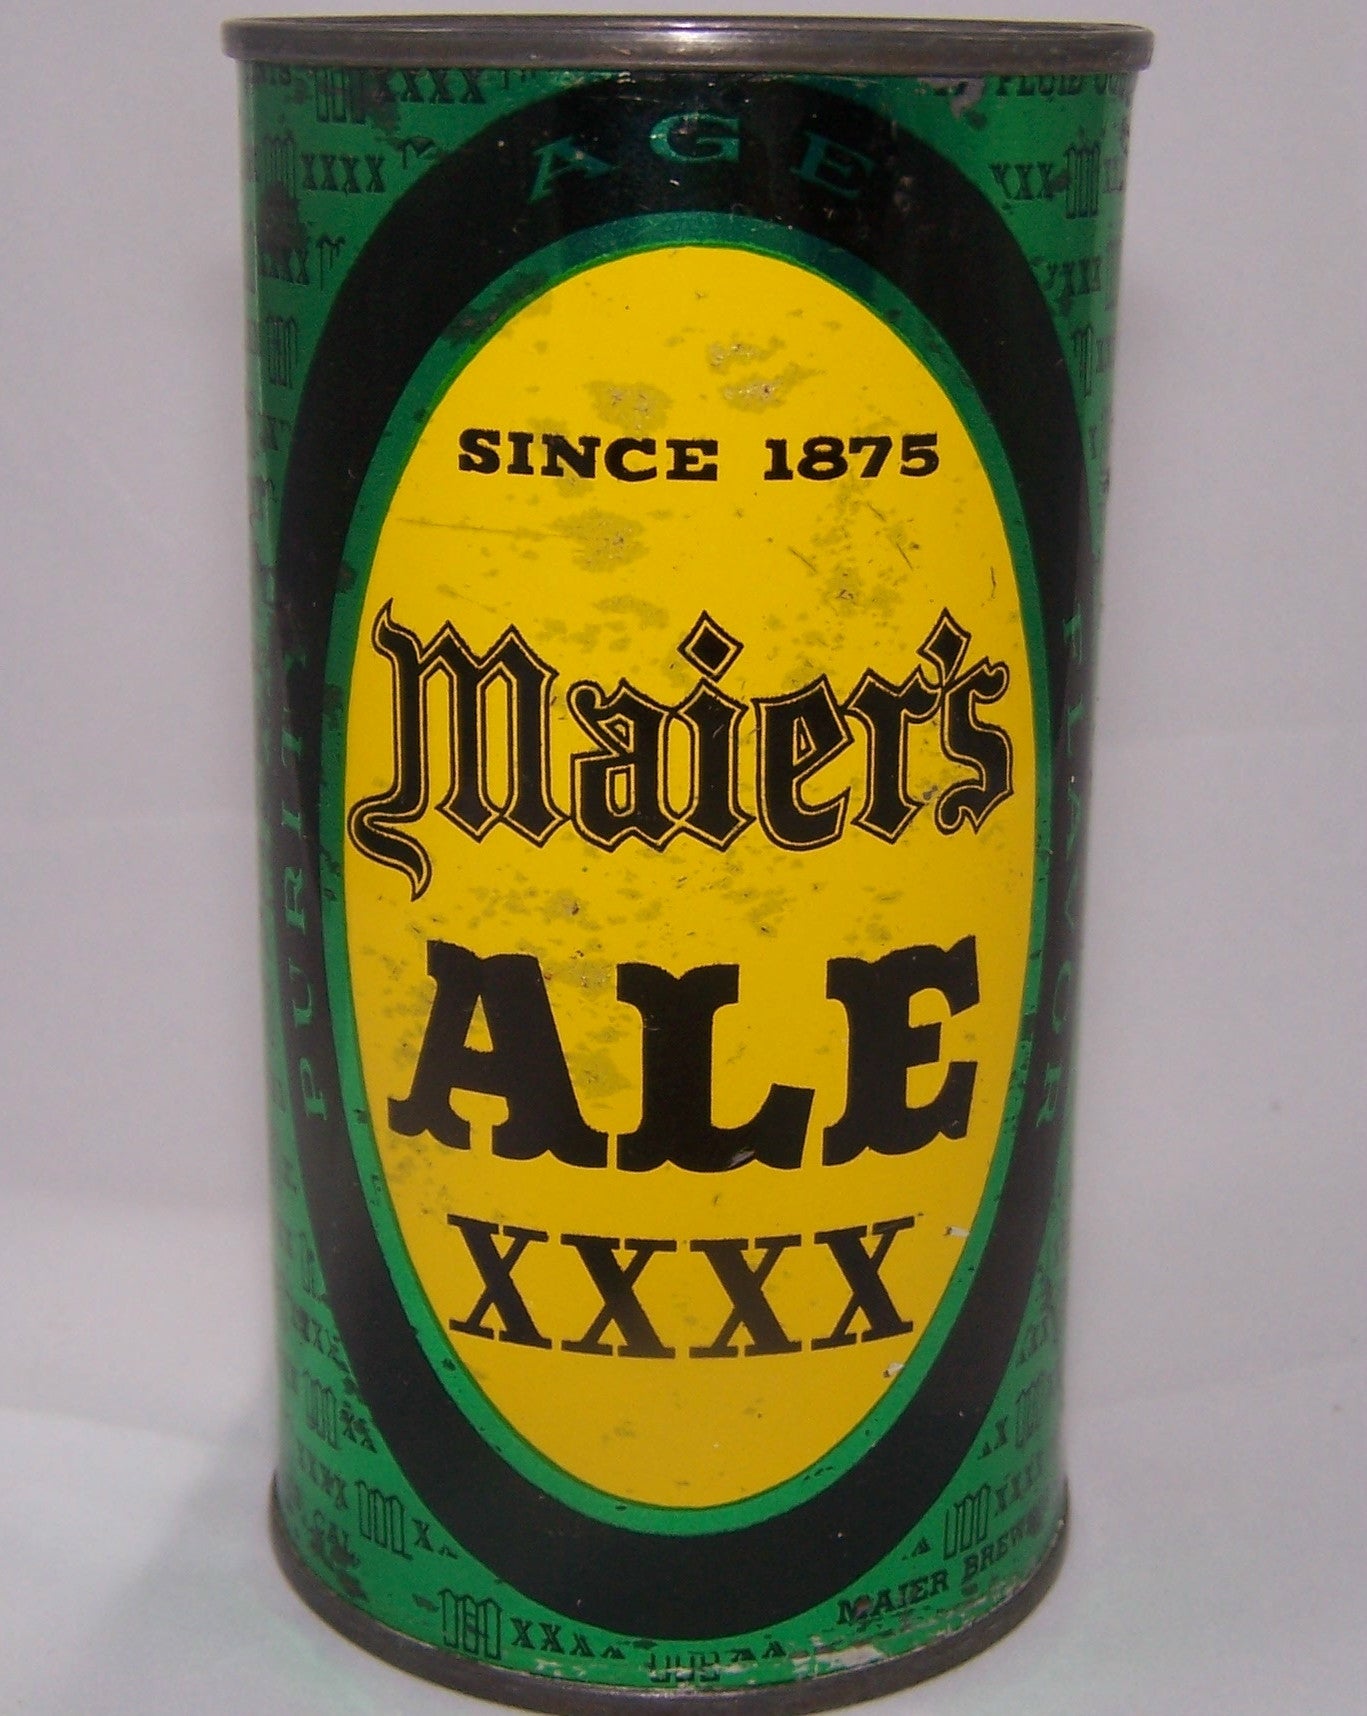 Maier's Ale XXXX, USBC 94-12, Grade 1- Sold on 9/2/15